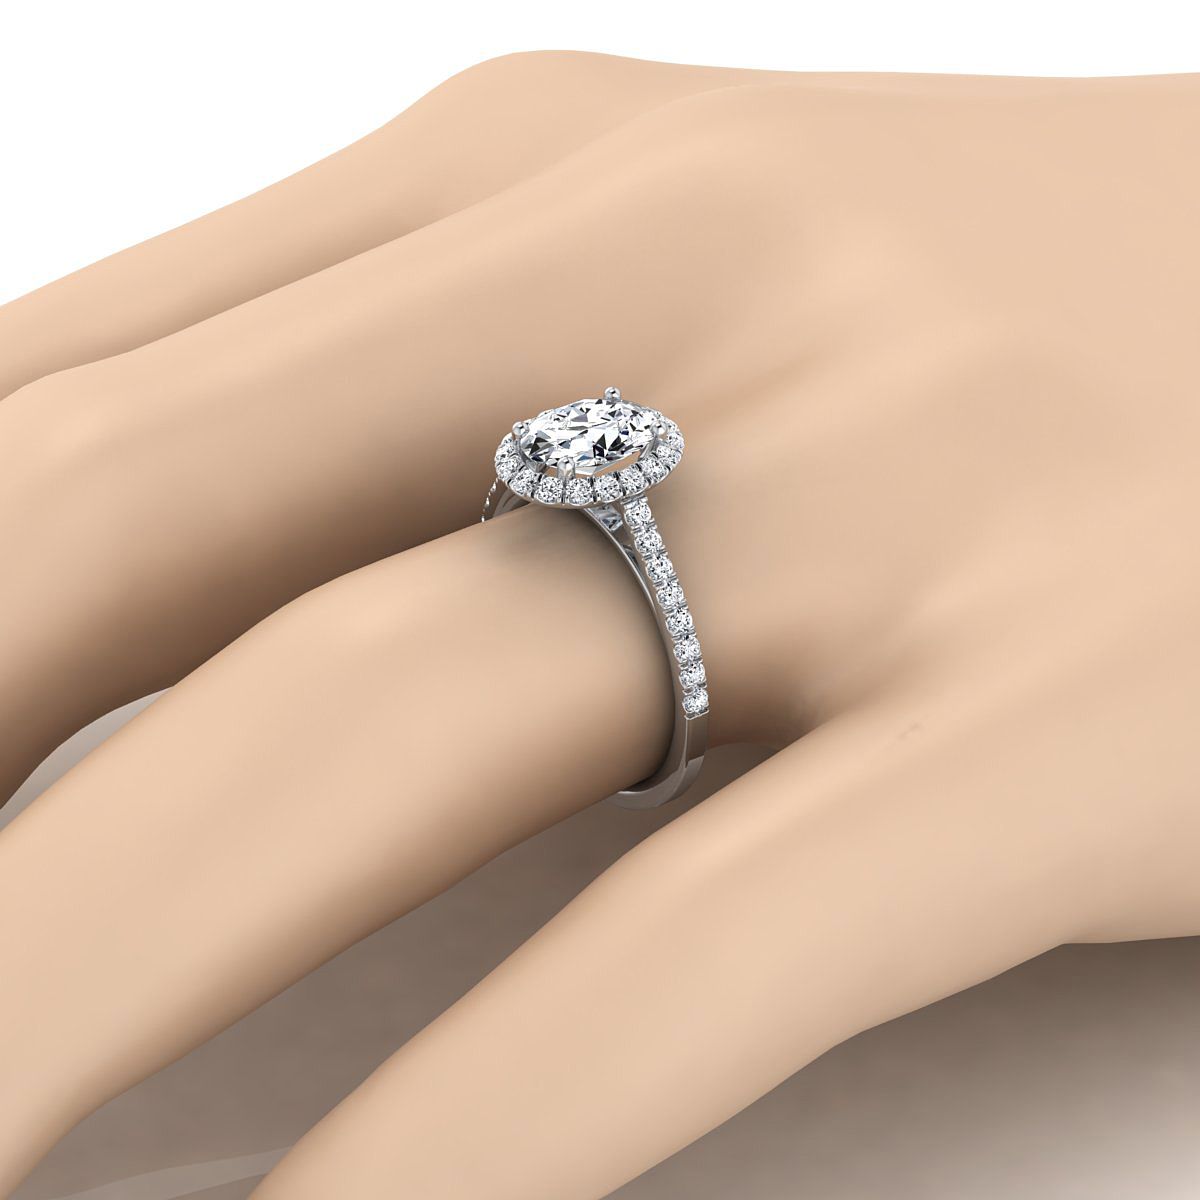 Platinum Oval Peridot Petite Halo French Diamond Pave Engagement Ring -3/8ctw